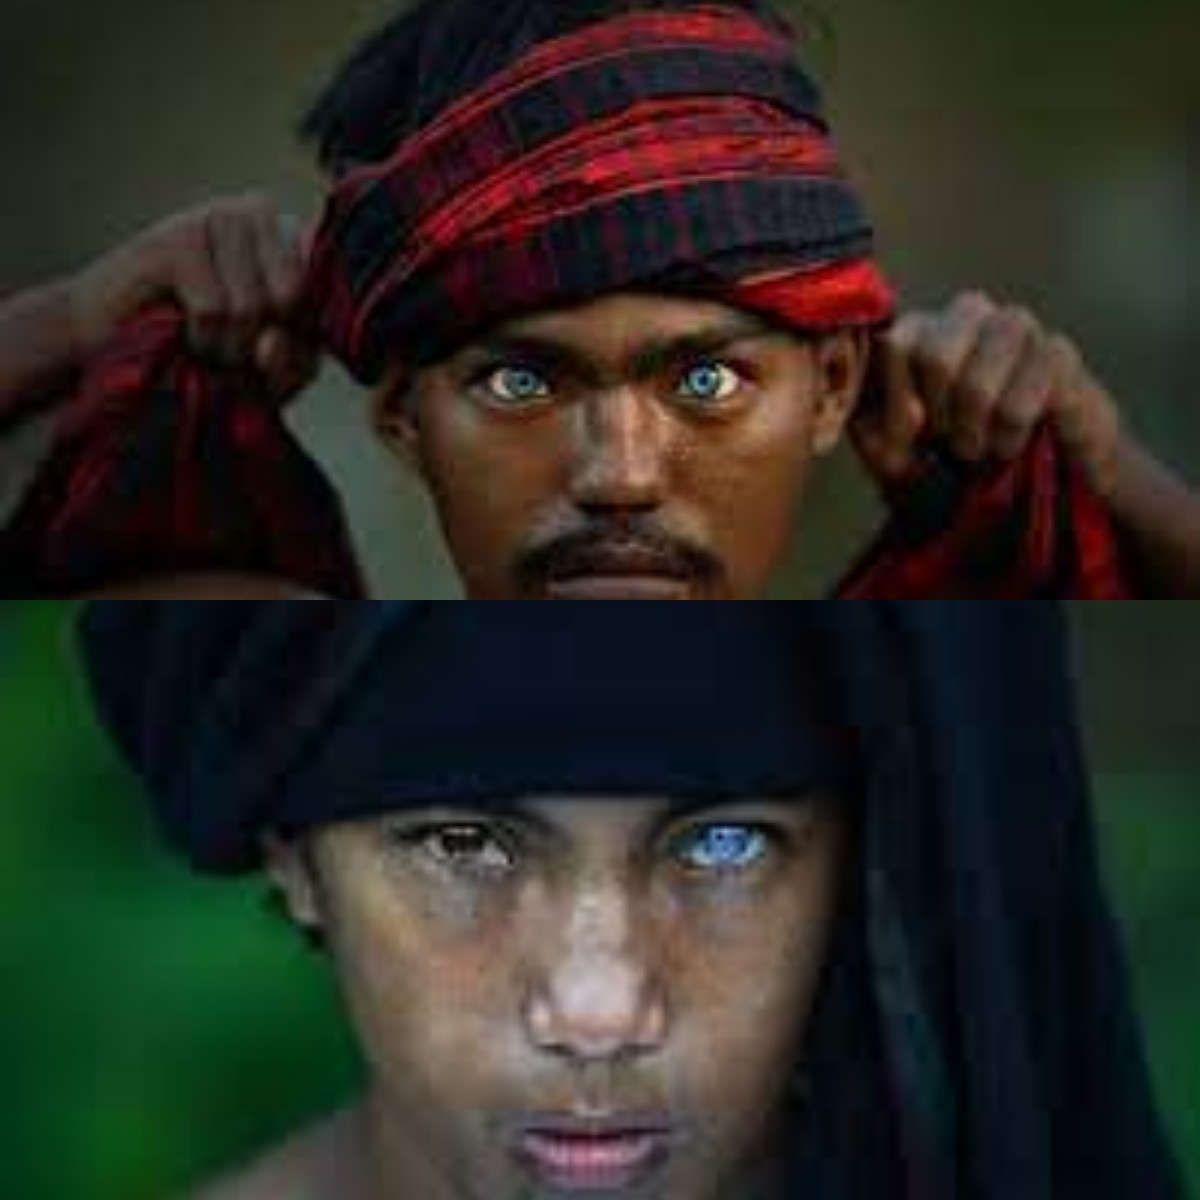 Inilah Keunikan 3 Suku di Indonesia yang Miliki Mata Biru, Suku Mana Sajakah? 